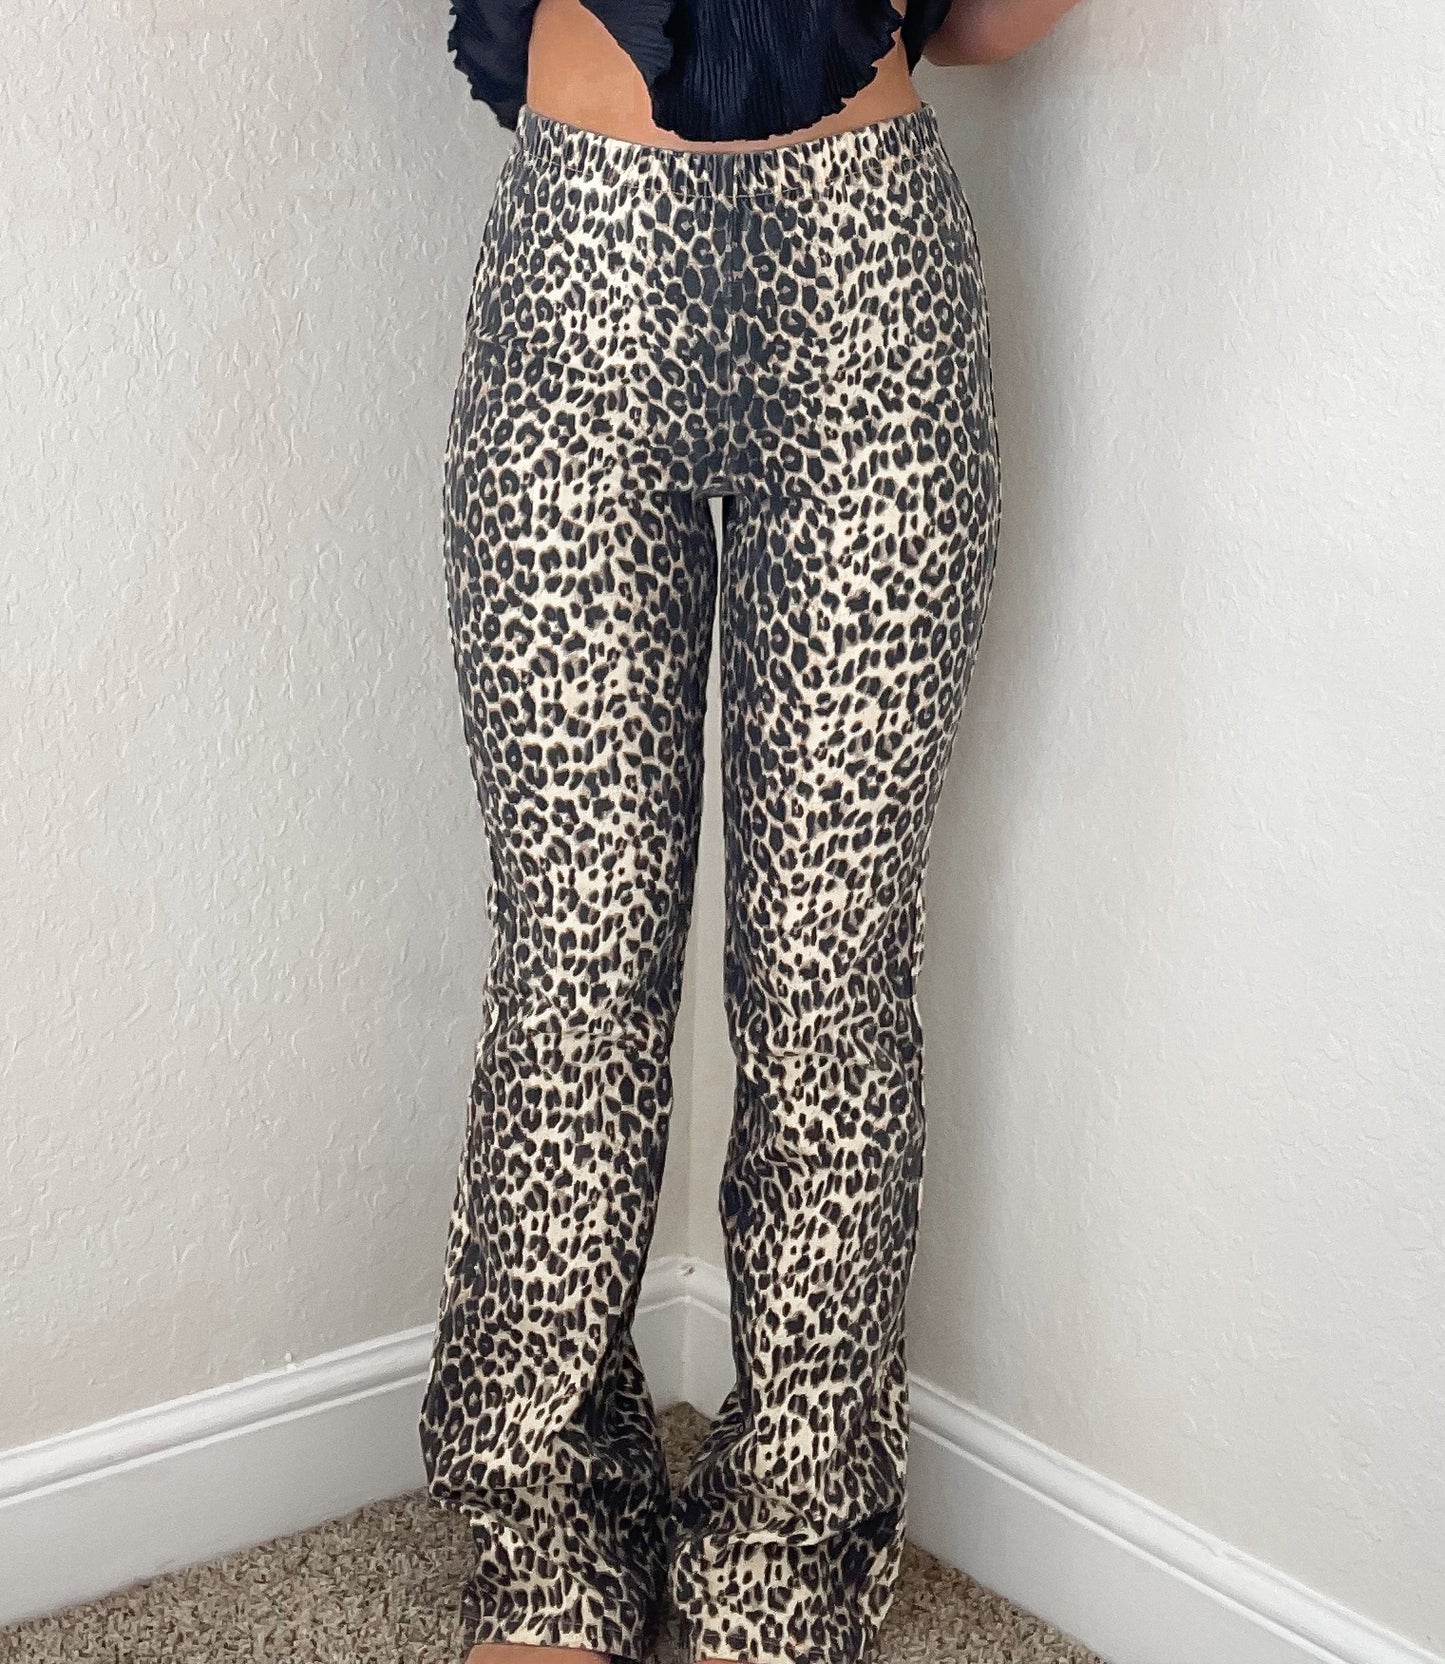 90s cheetah flare pants